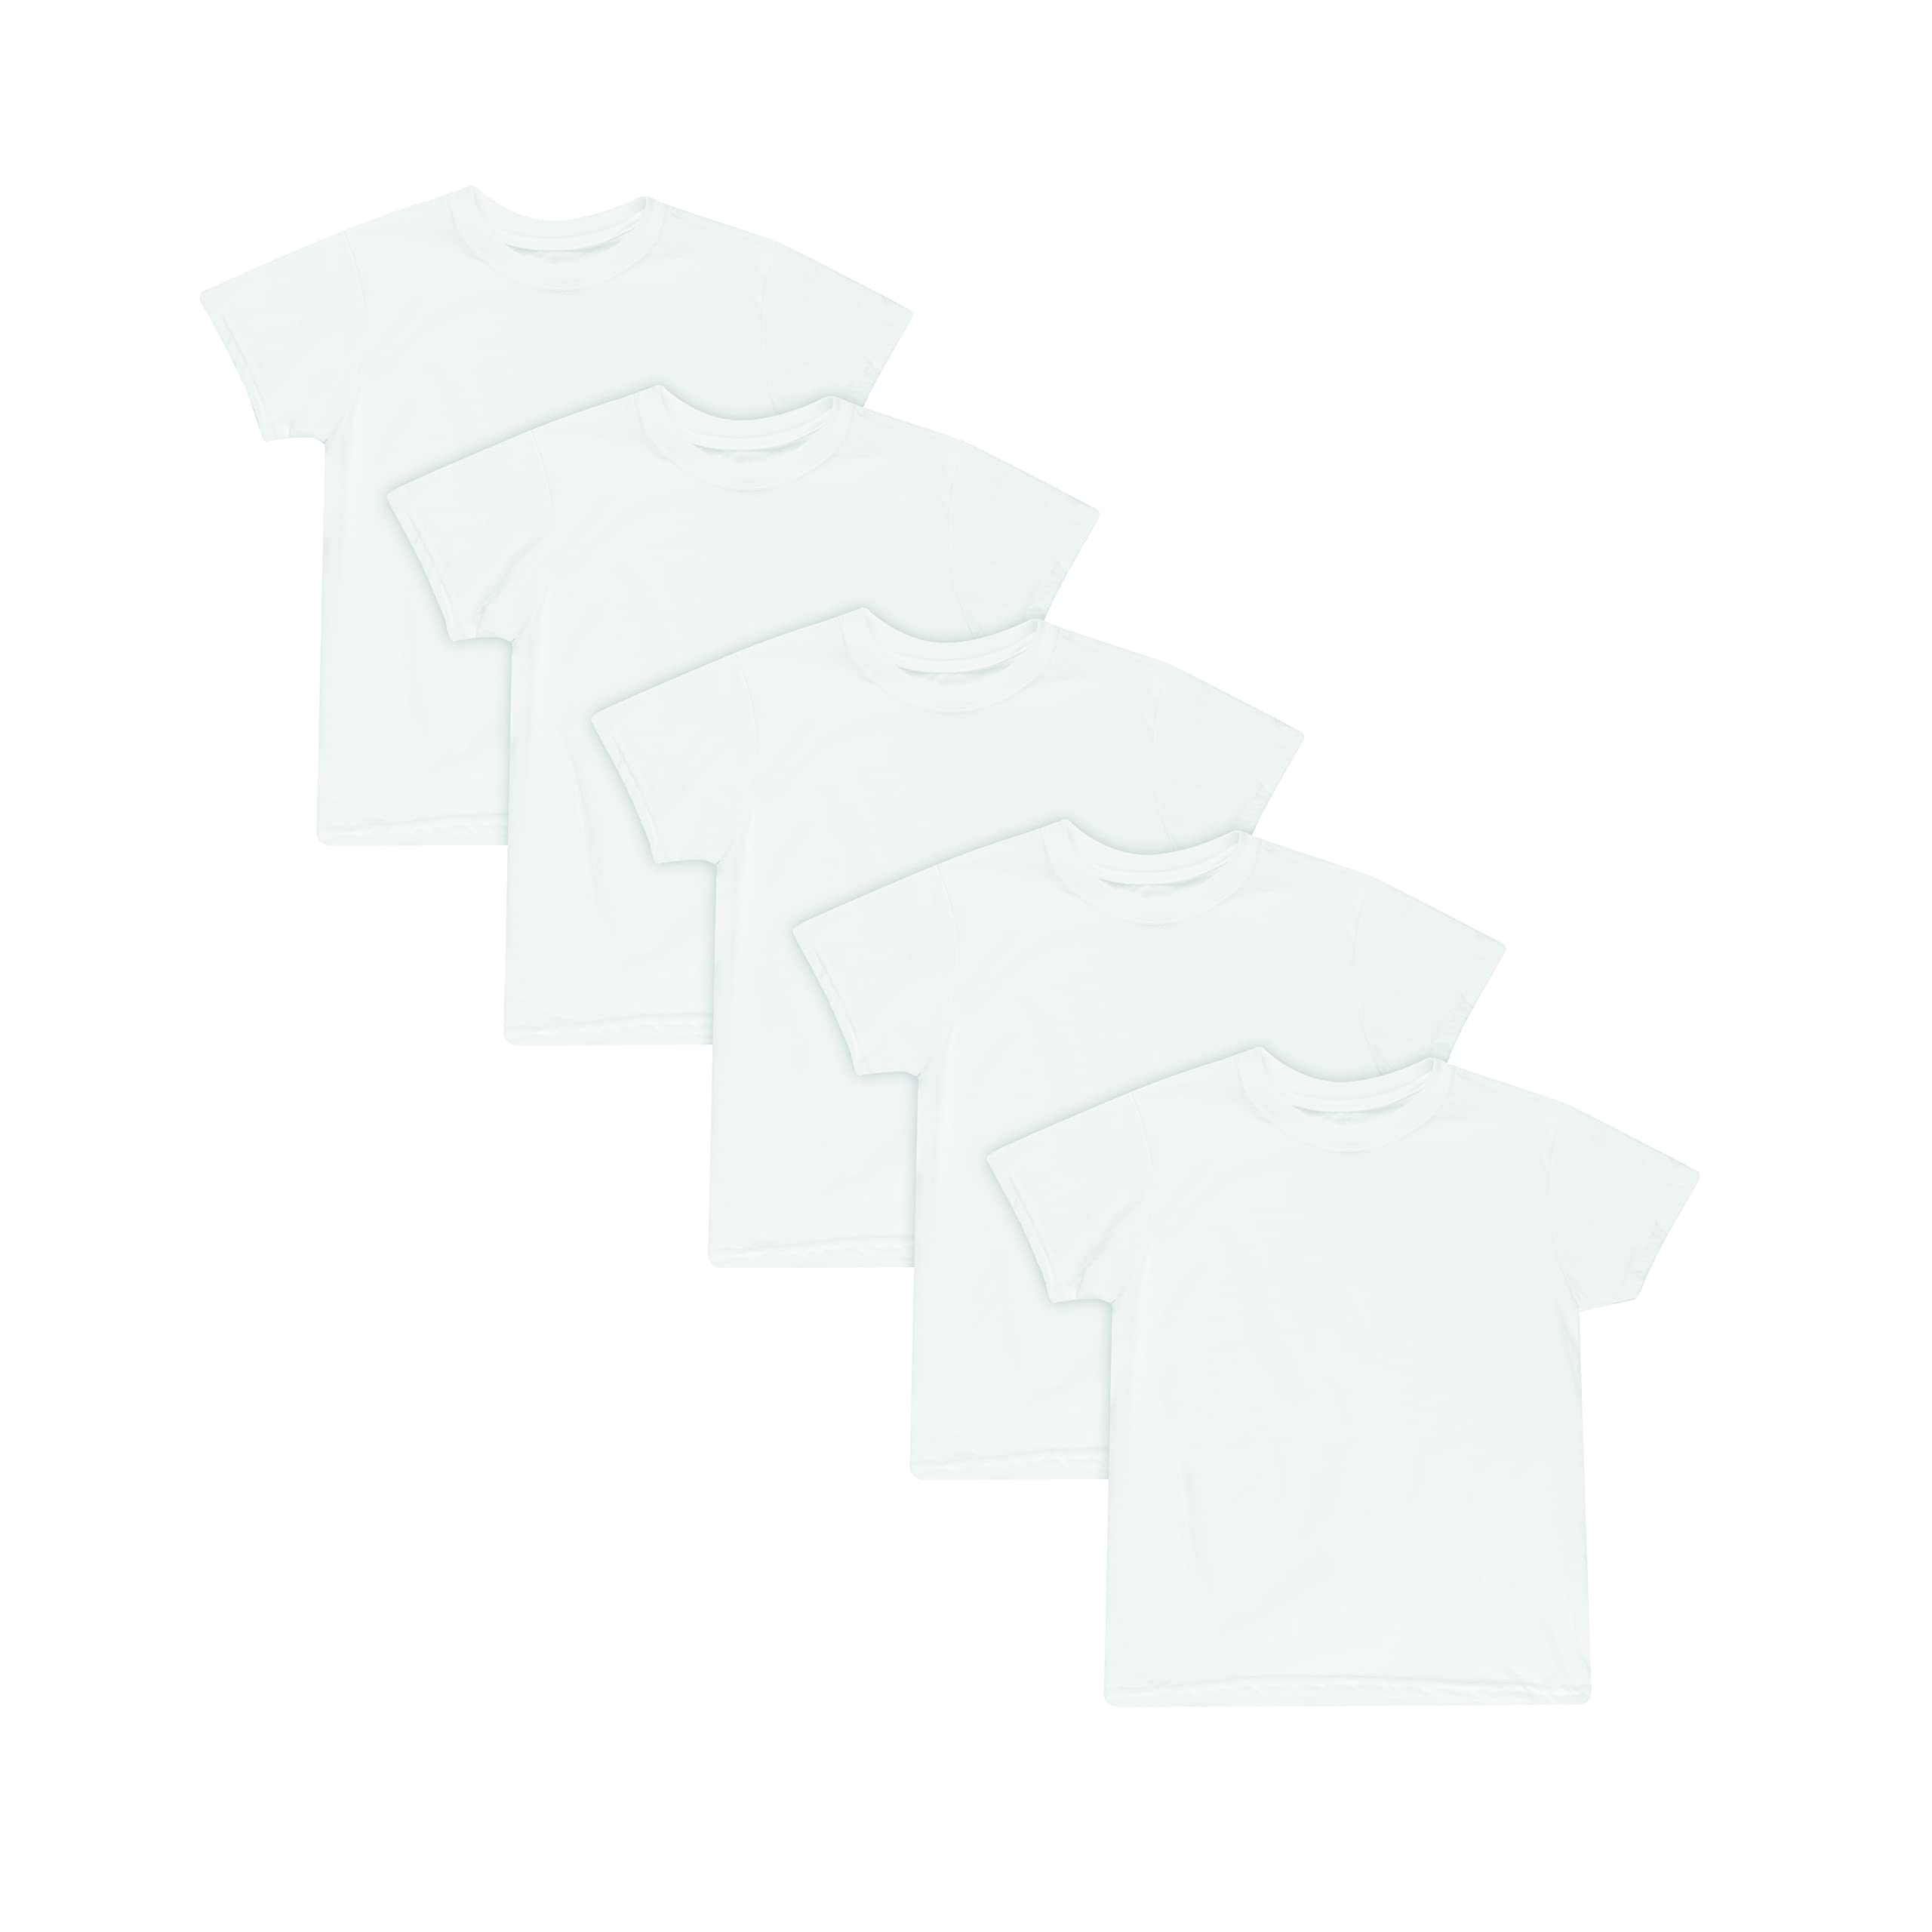 Hanes Boys' Undershirt, EcoSmart Short Sleeve Crew Shirts, Multiple Packs Available